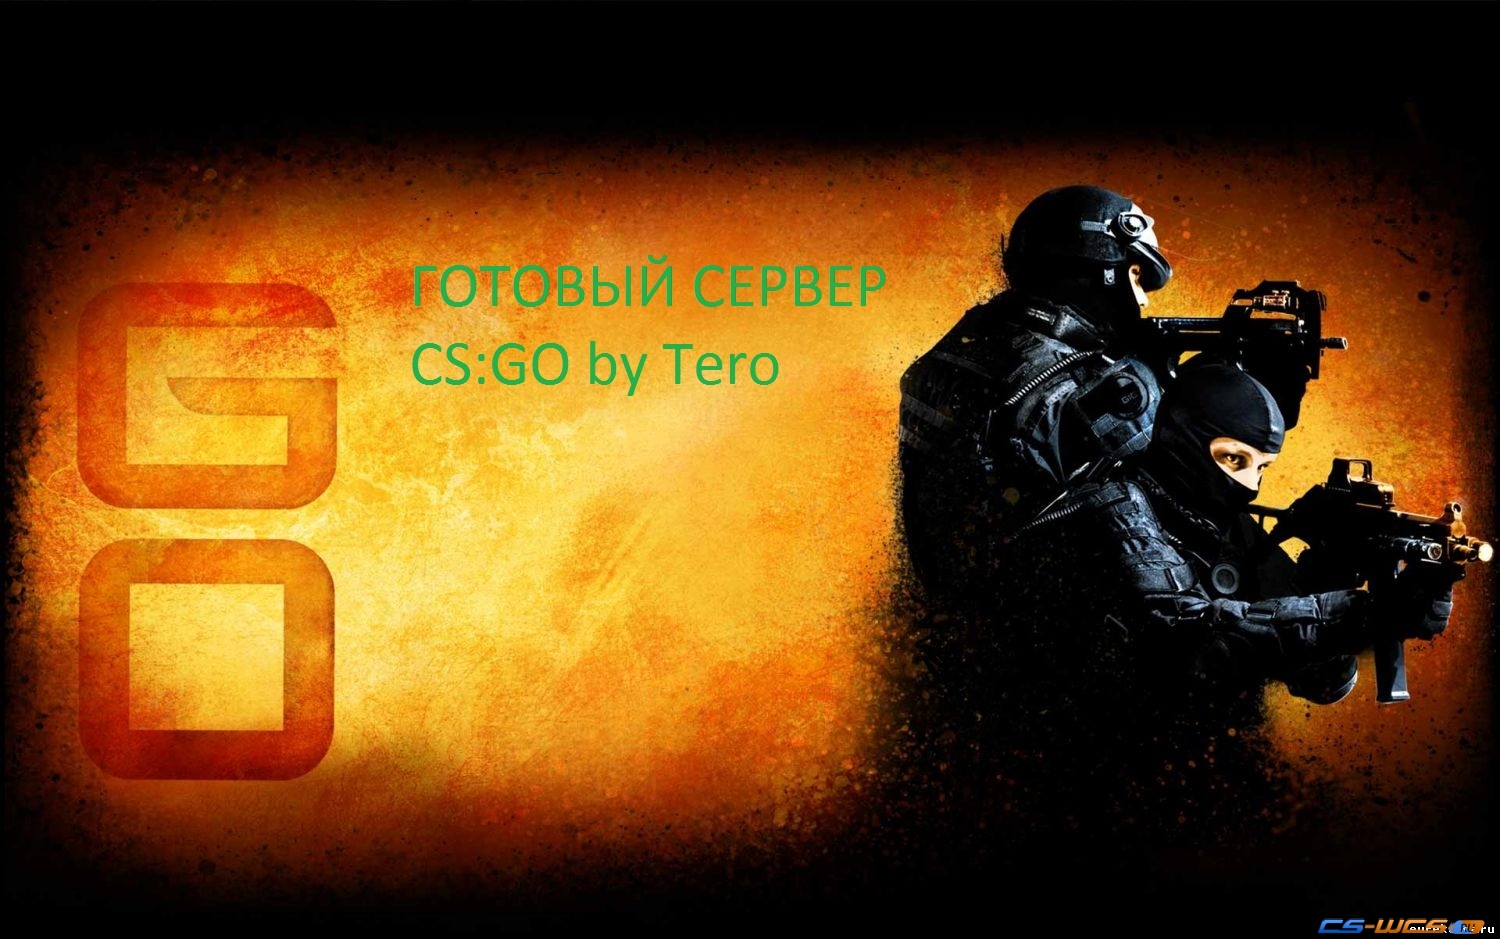 Готовый сервер CS:GO by Tero